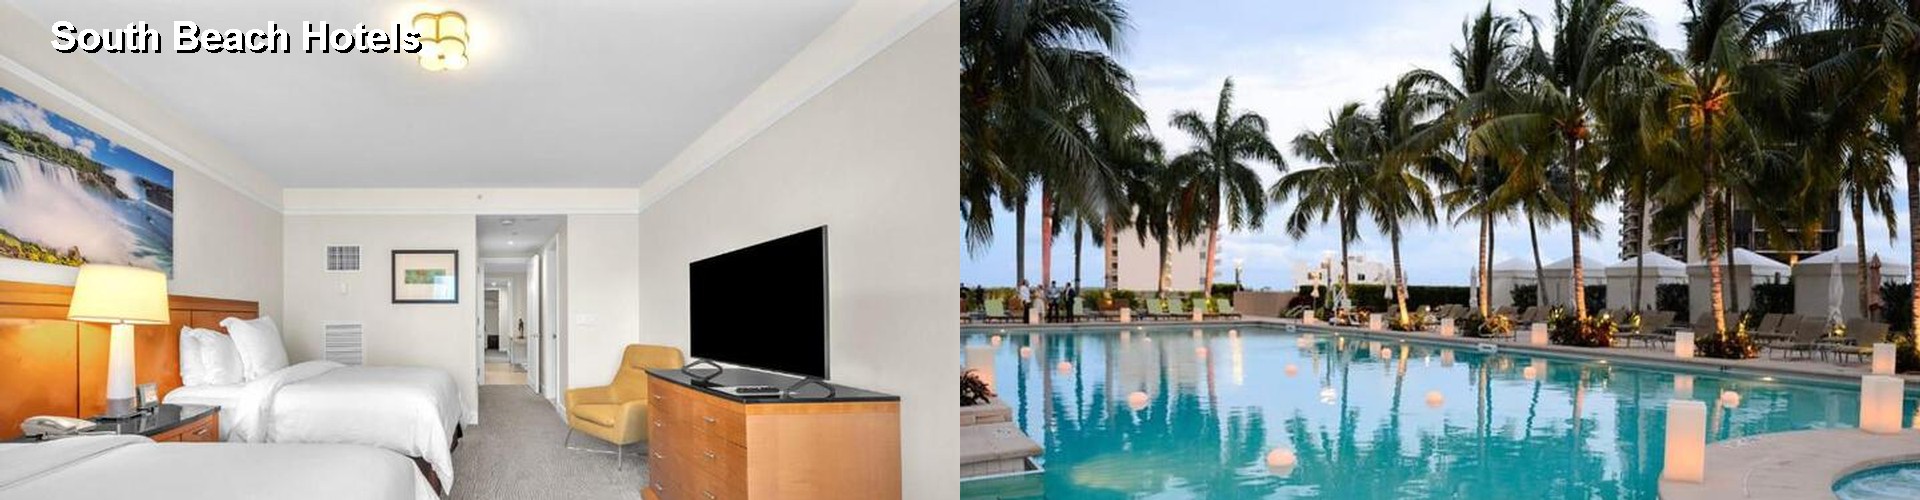 5 Best Hotels near South Beach